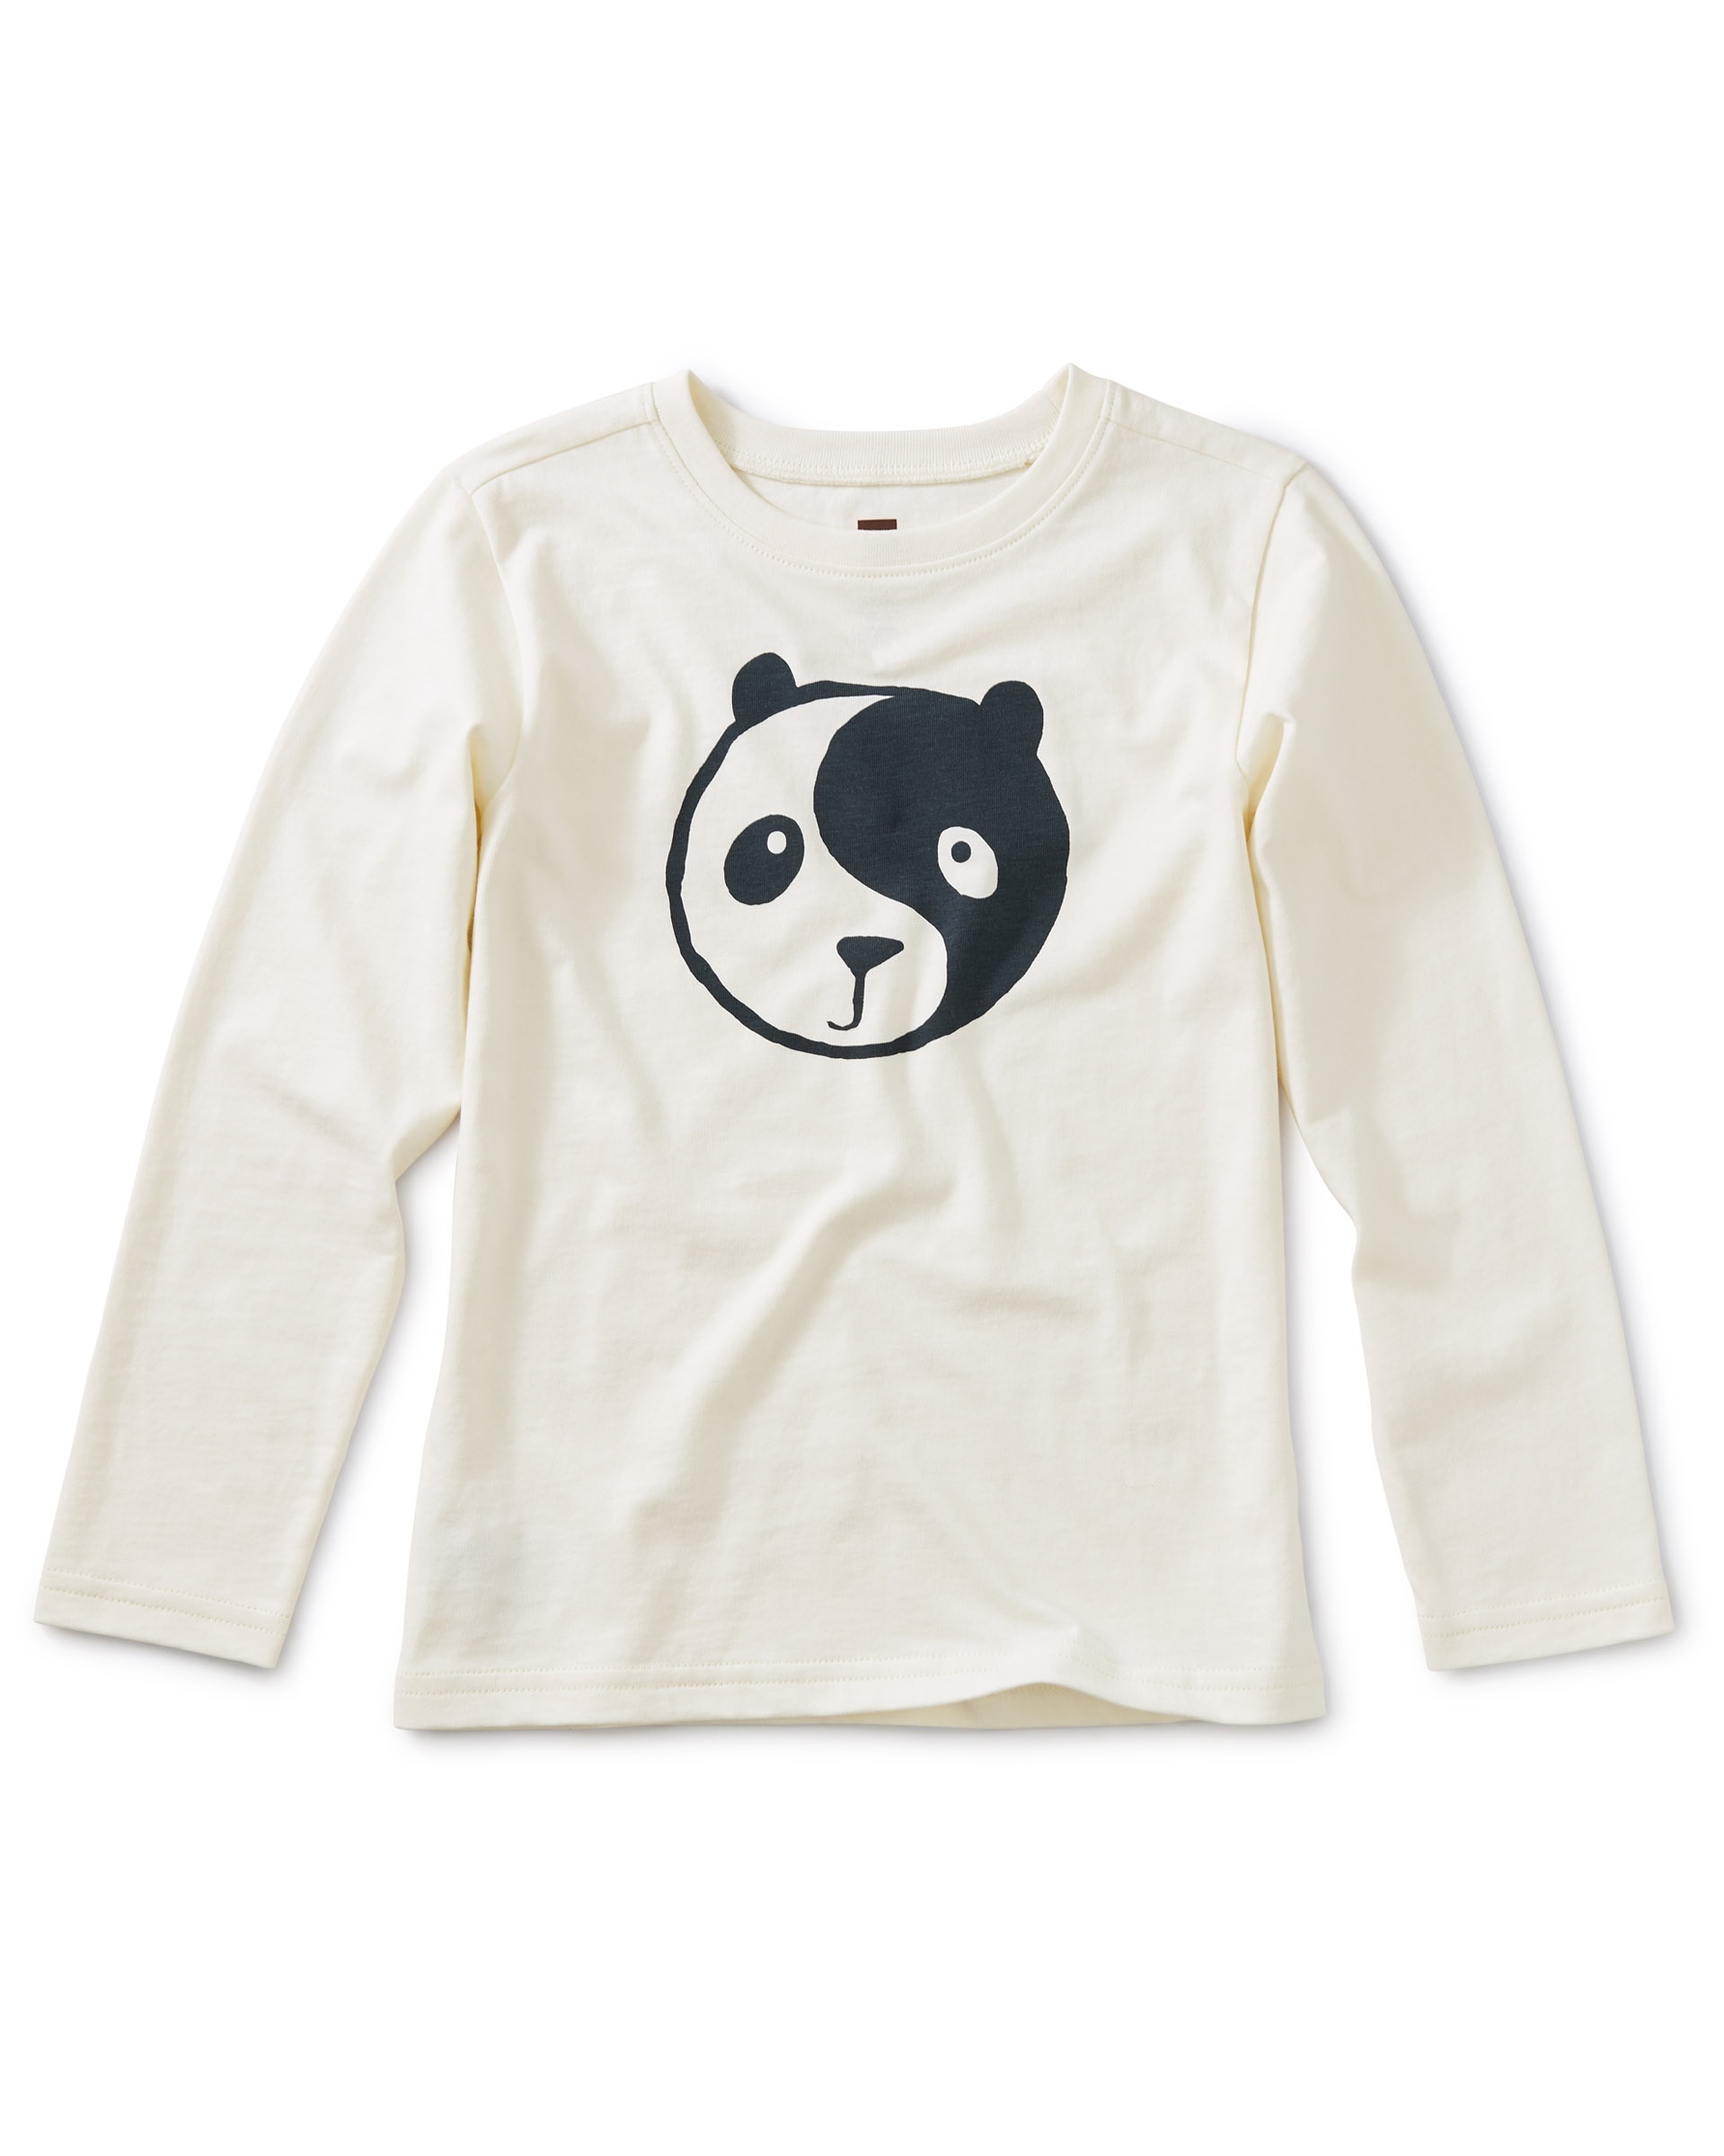 Yin Yang Panda Graphic Tee | Tea Collection